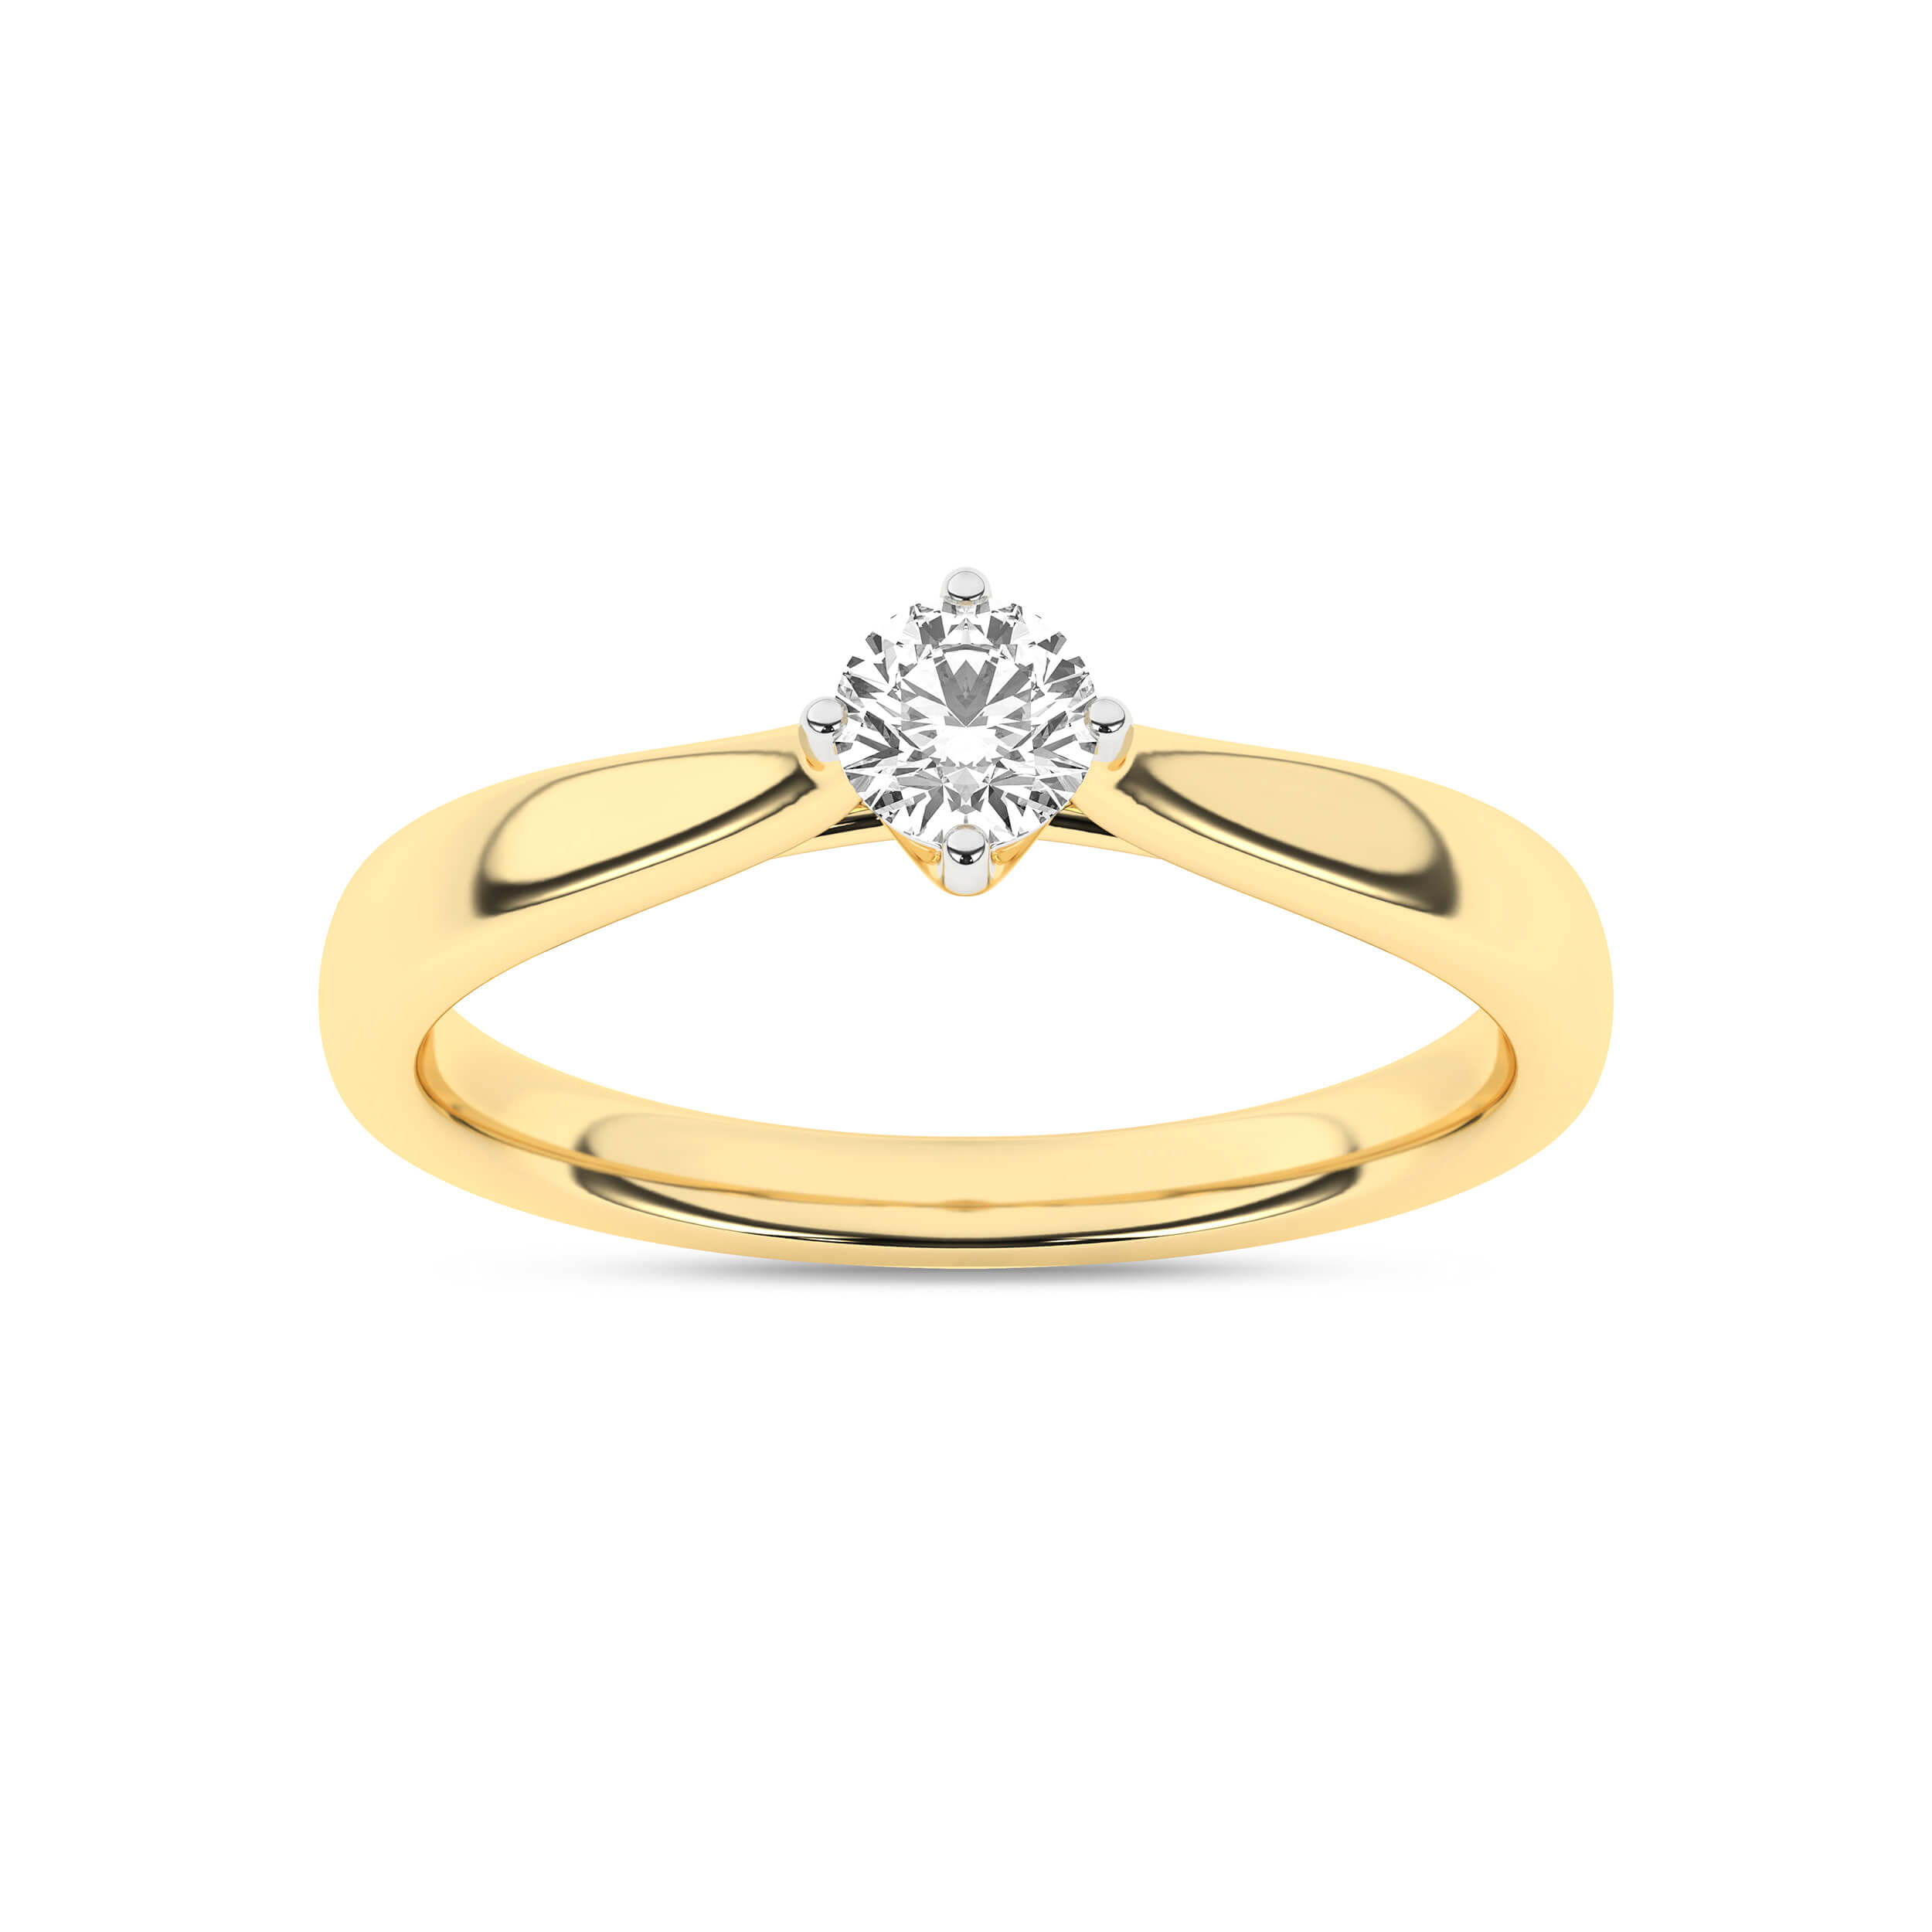 Inel de logodna din Aur Galben 14K cu Diamant 0.25Ct, articol RS1441, previzualizare foto 3